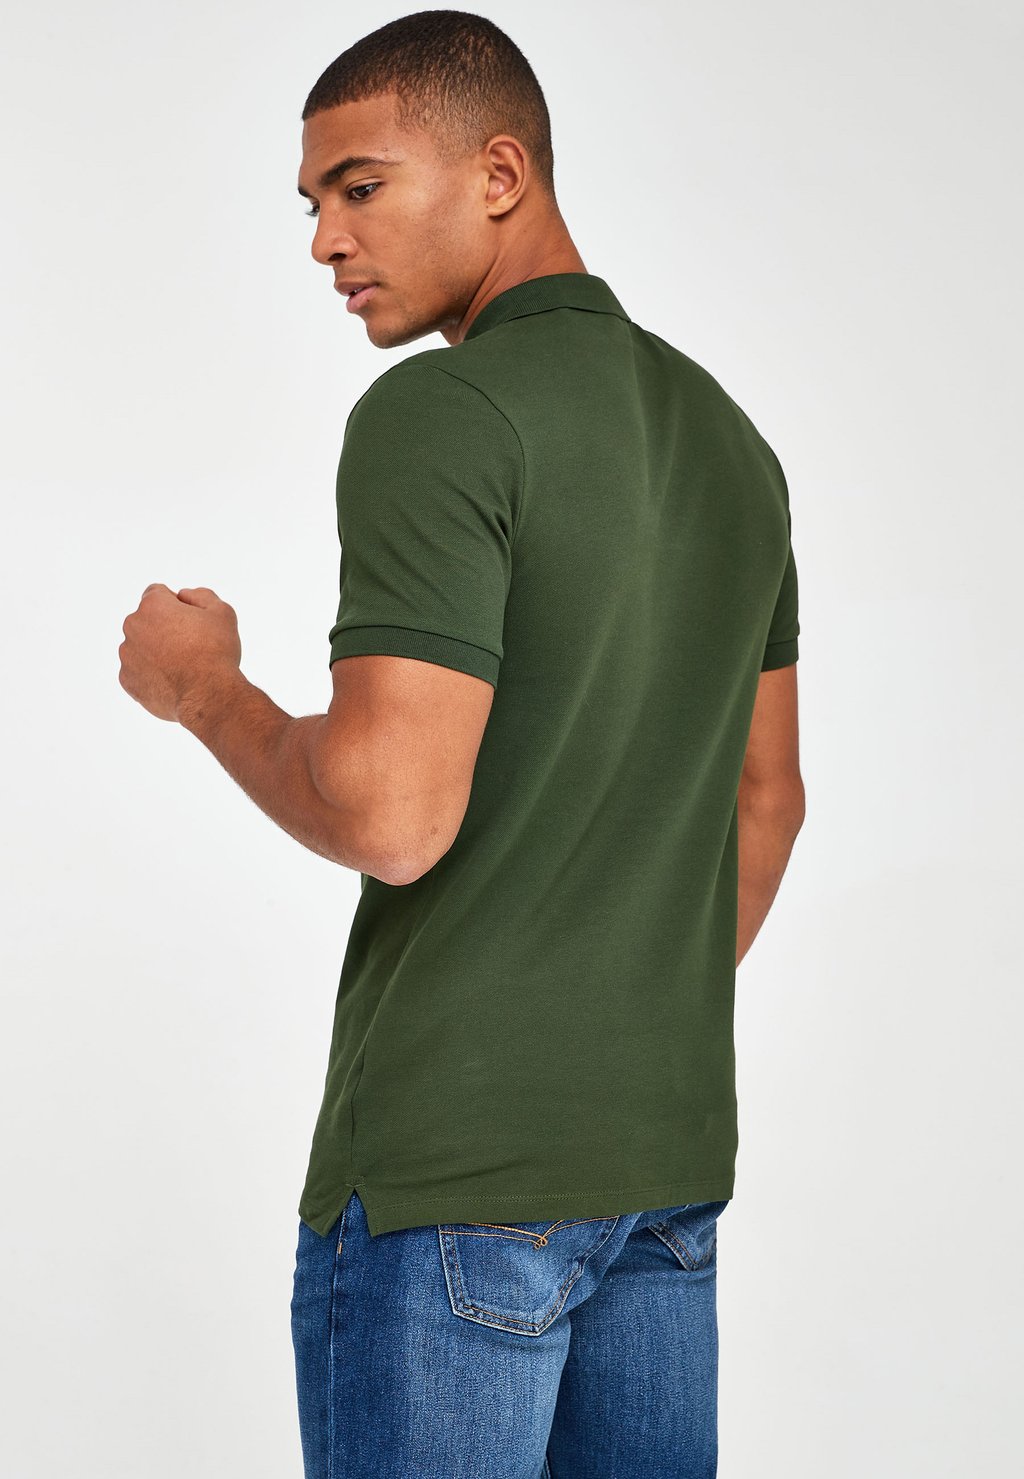 Рубашка-поло Next, темно-зеленая